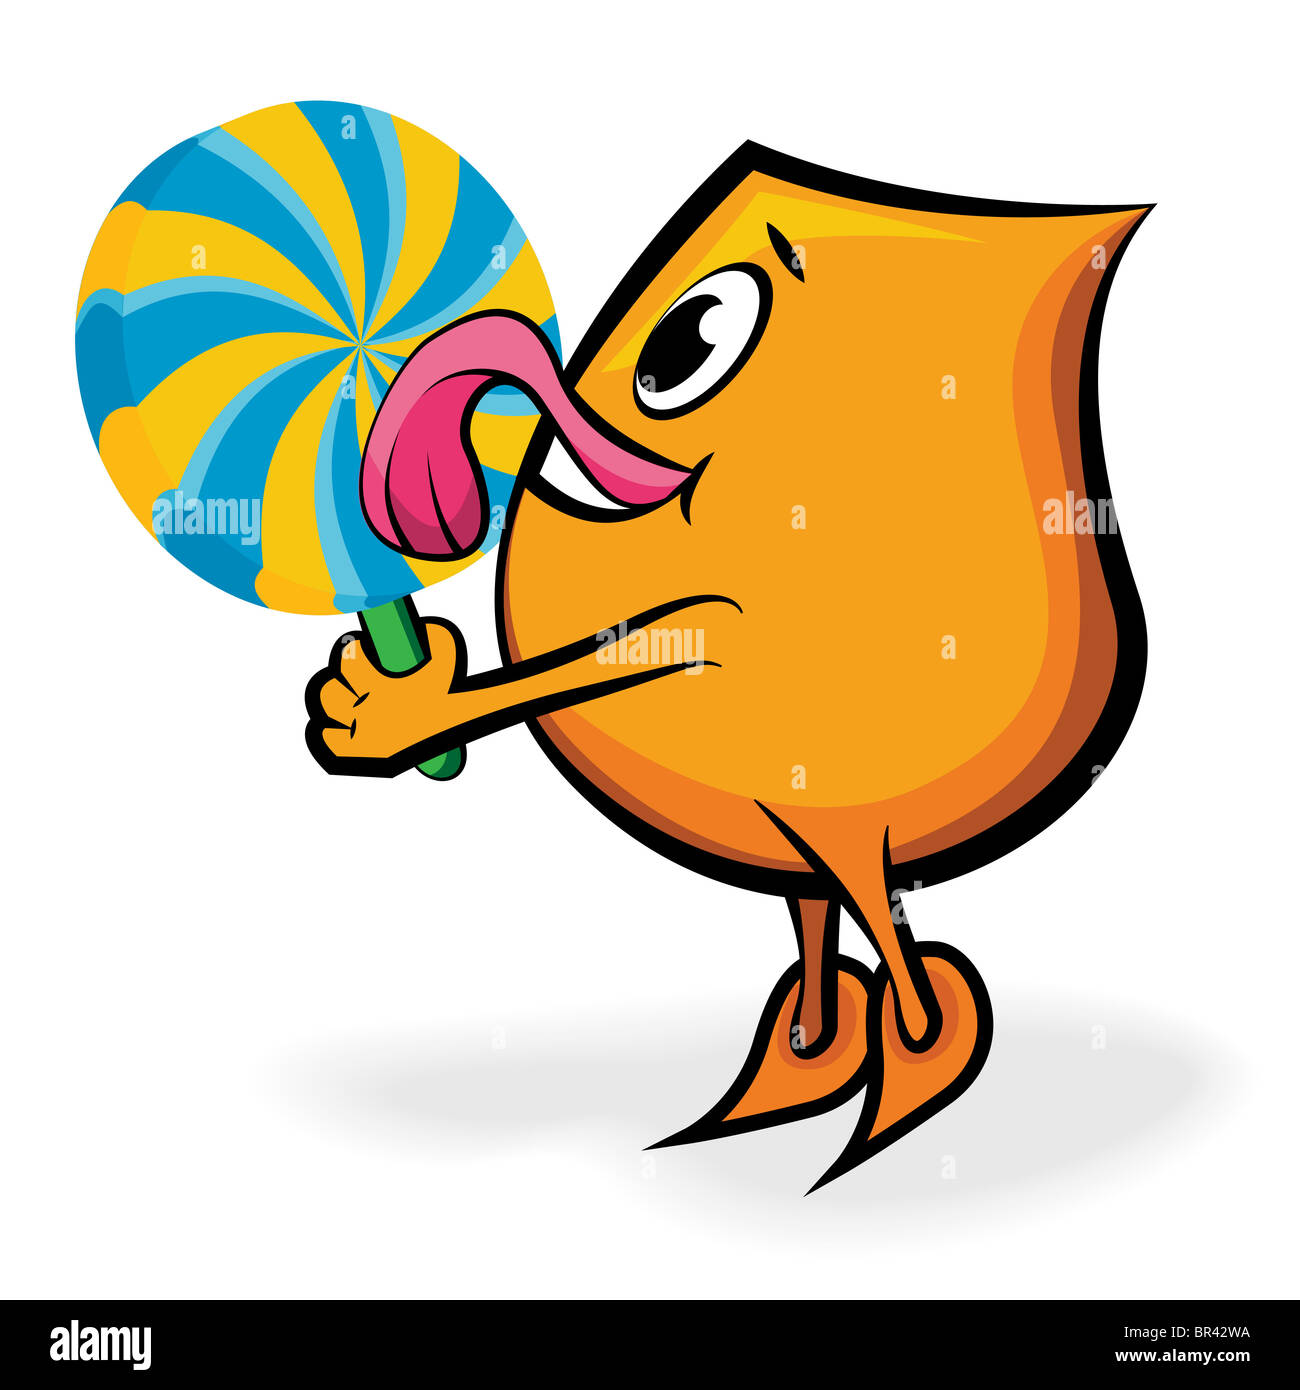 Cartoon character Blinky licking big lollipop, illustration Stock Photo